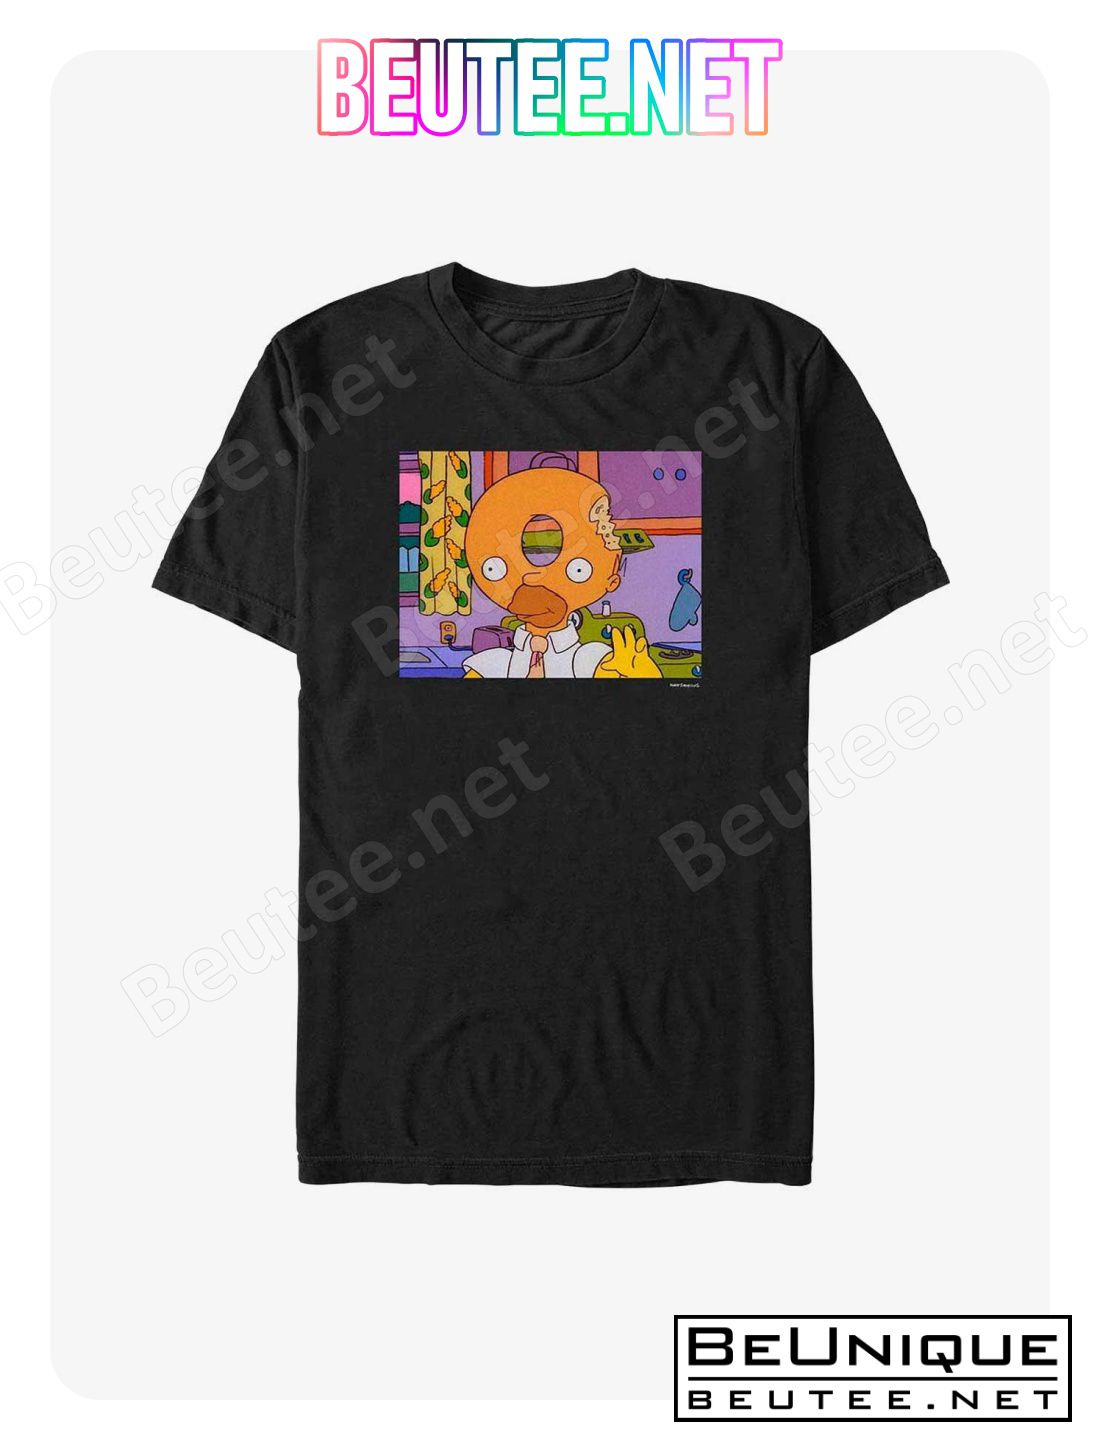 The Simpsons Homer Donut Head T-Shirt